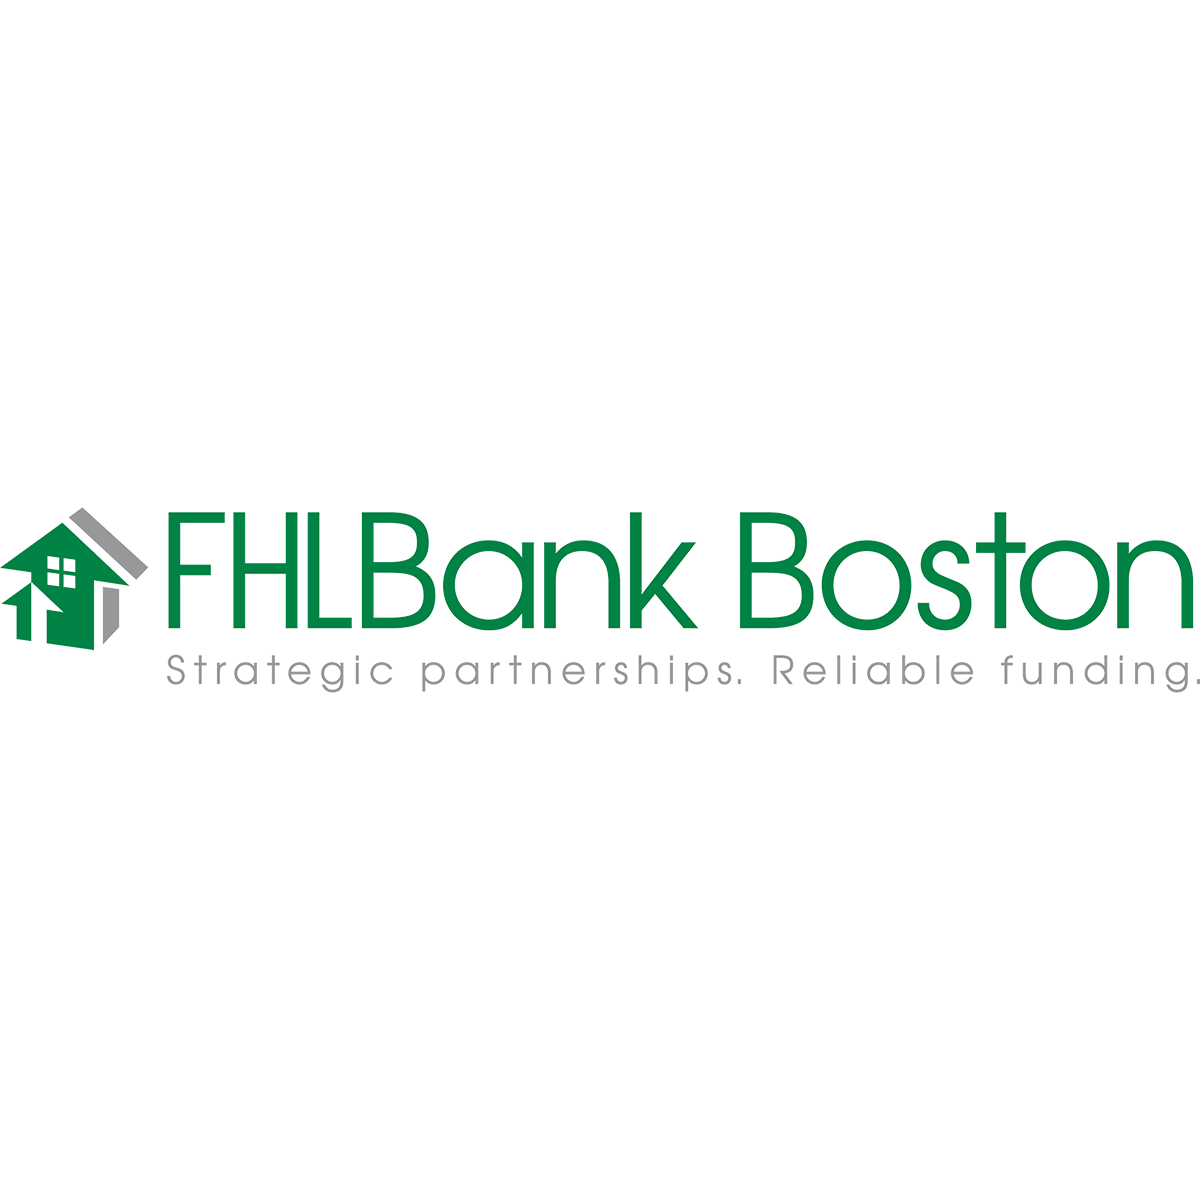 FHLBank Boston